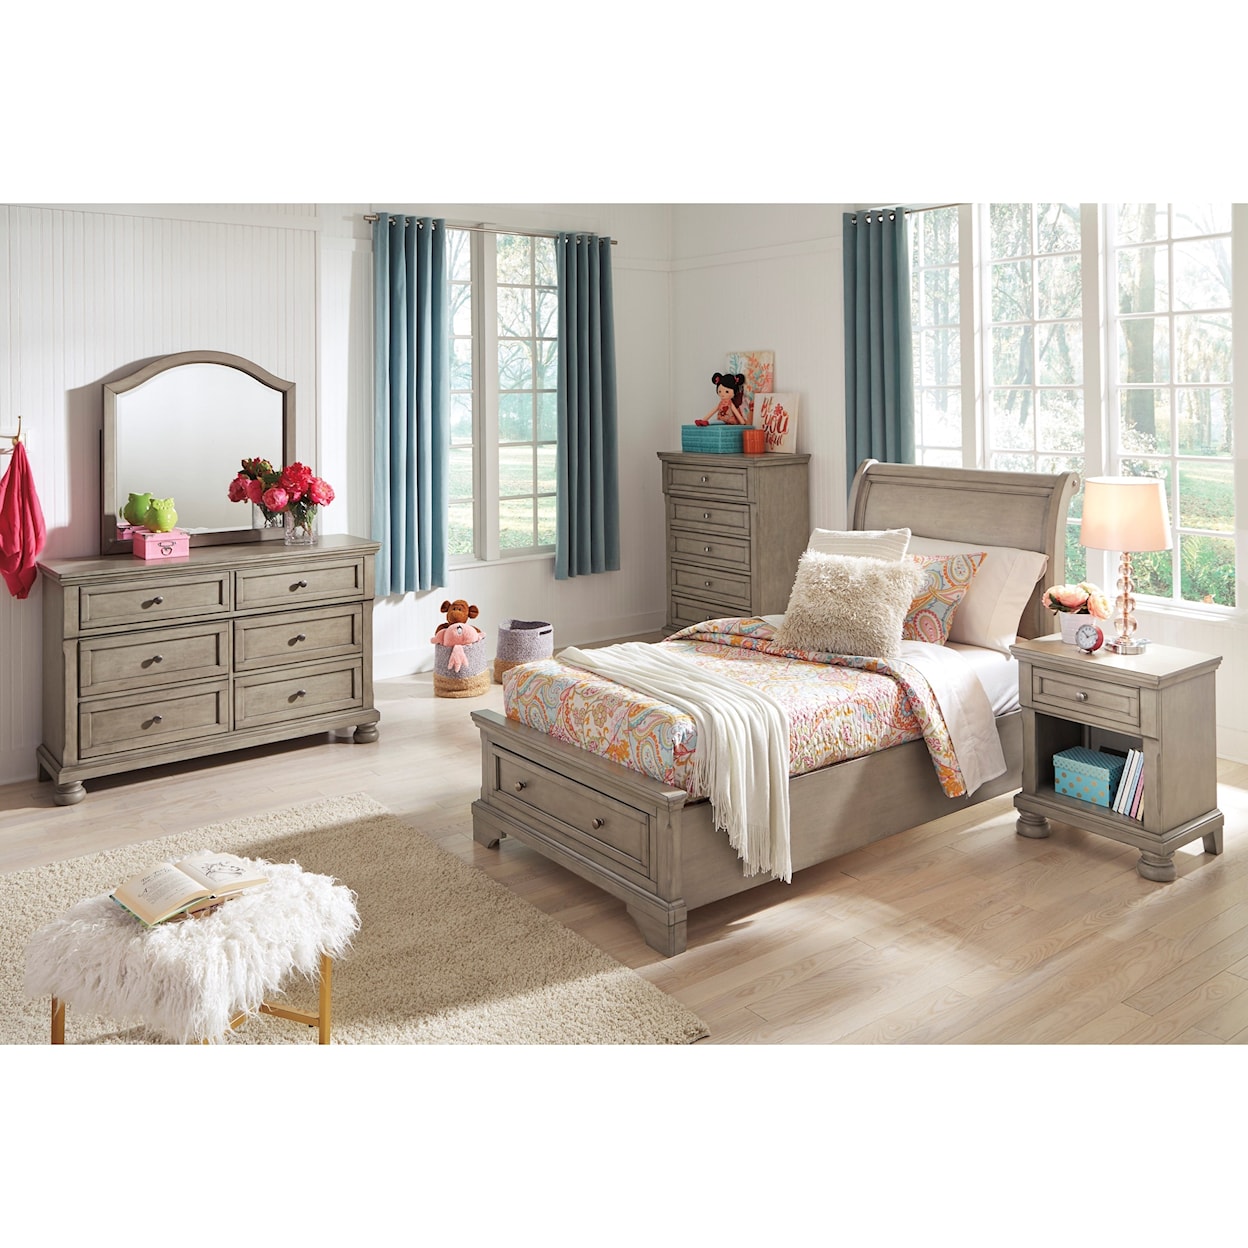 Ashley Furniture Signature Design Lettner Twin Bedroom Group